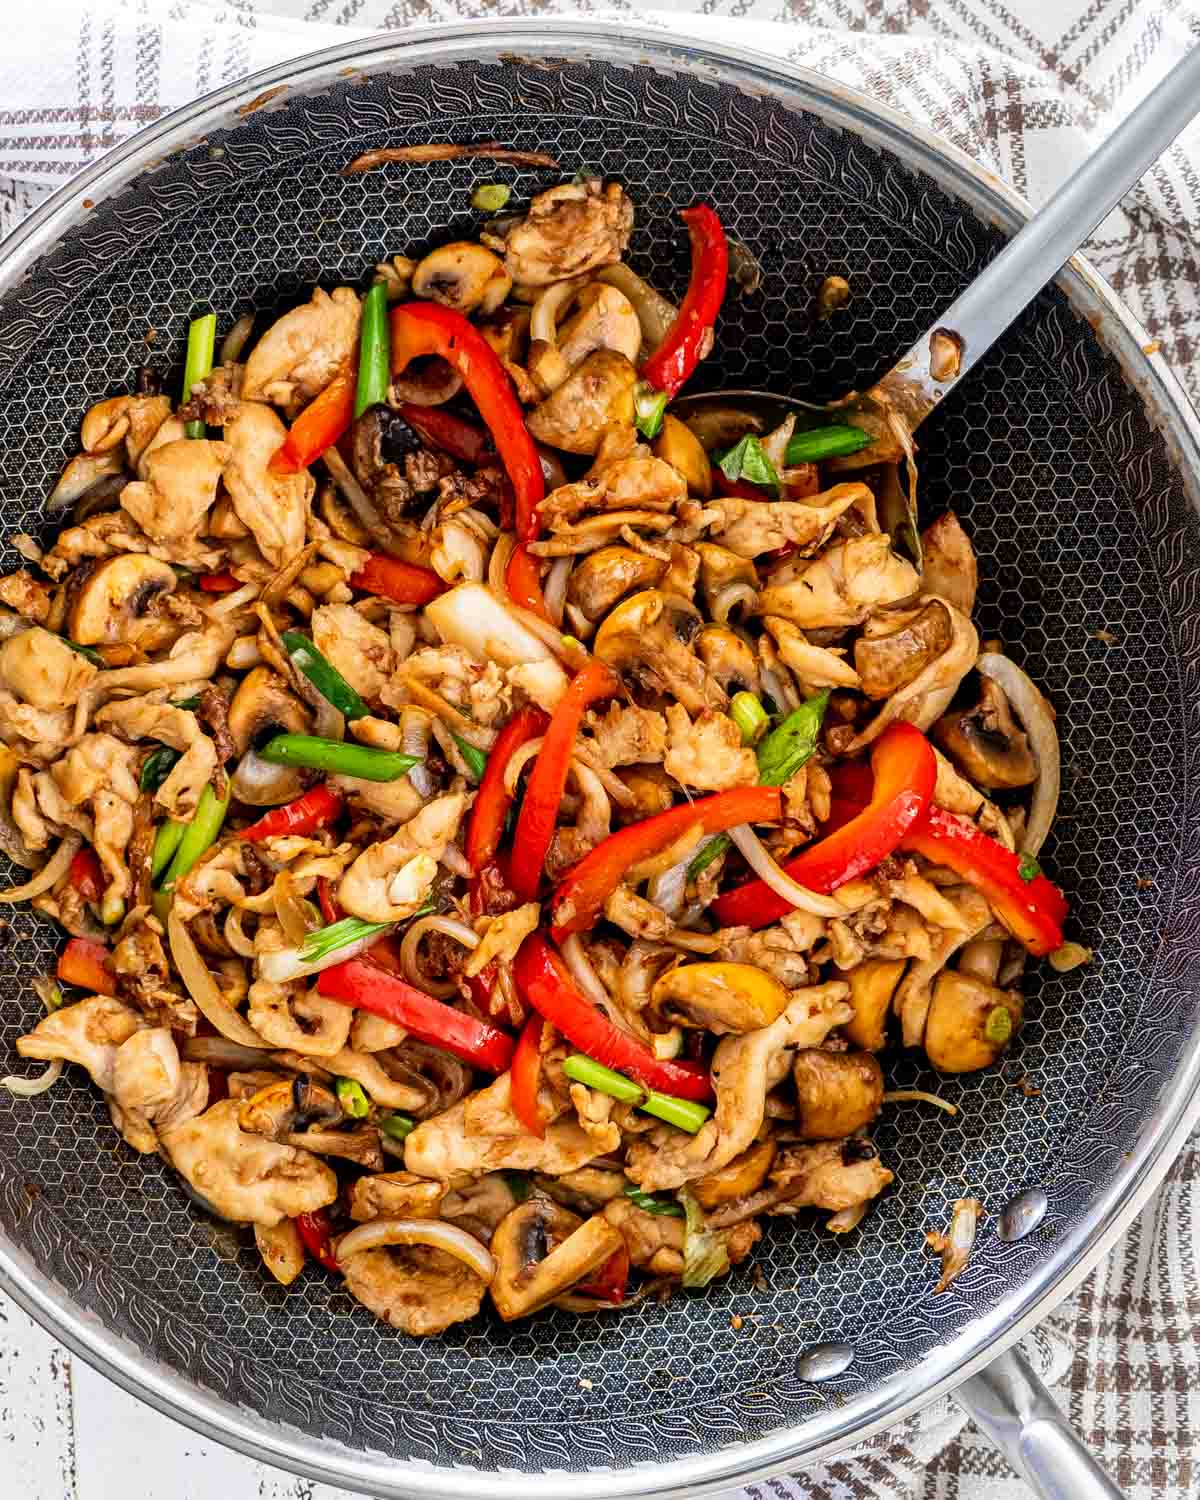 chicken mushroom stir fry freshly made in a wok.